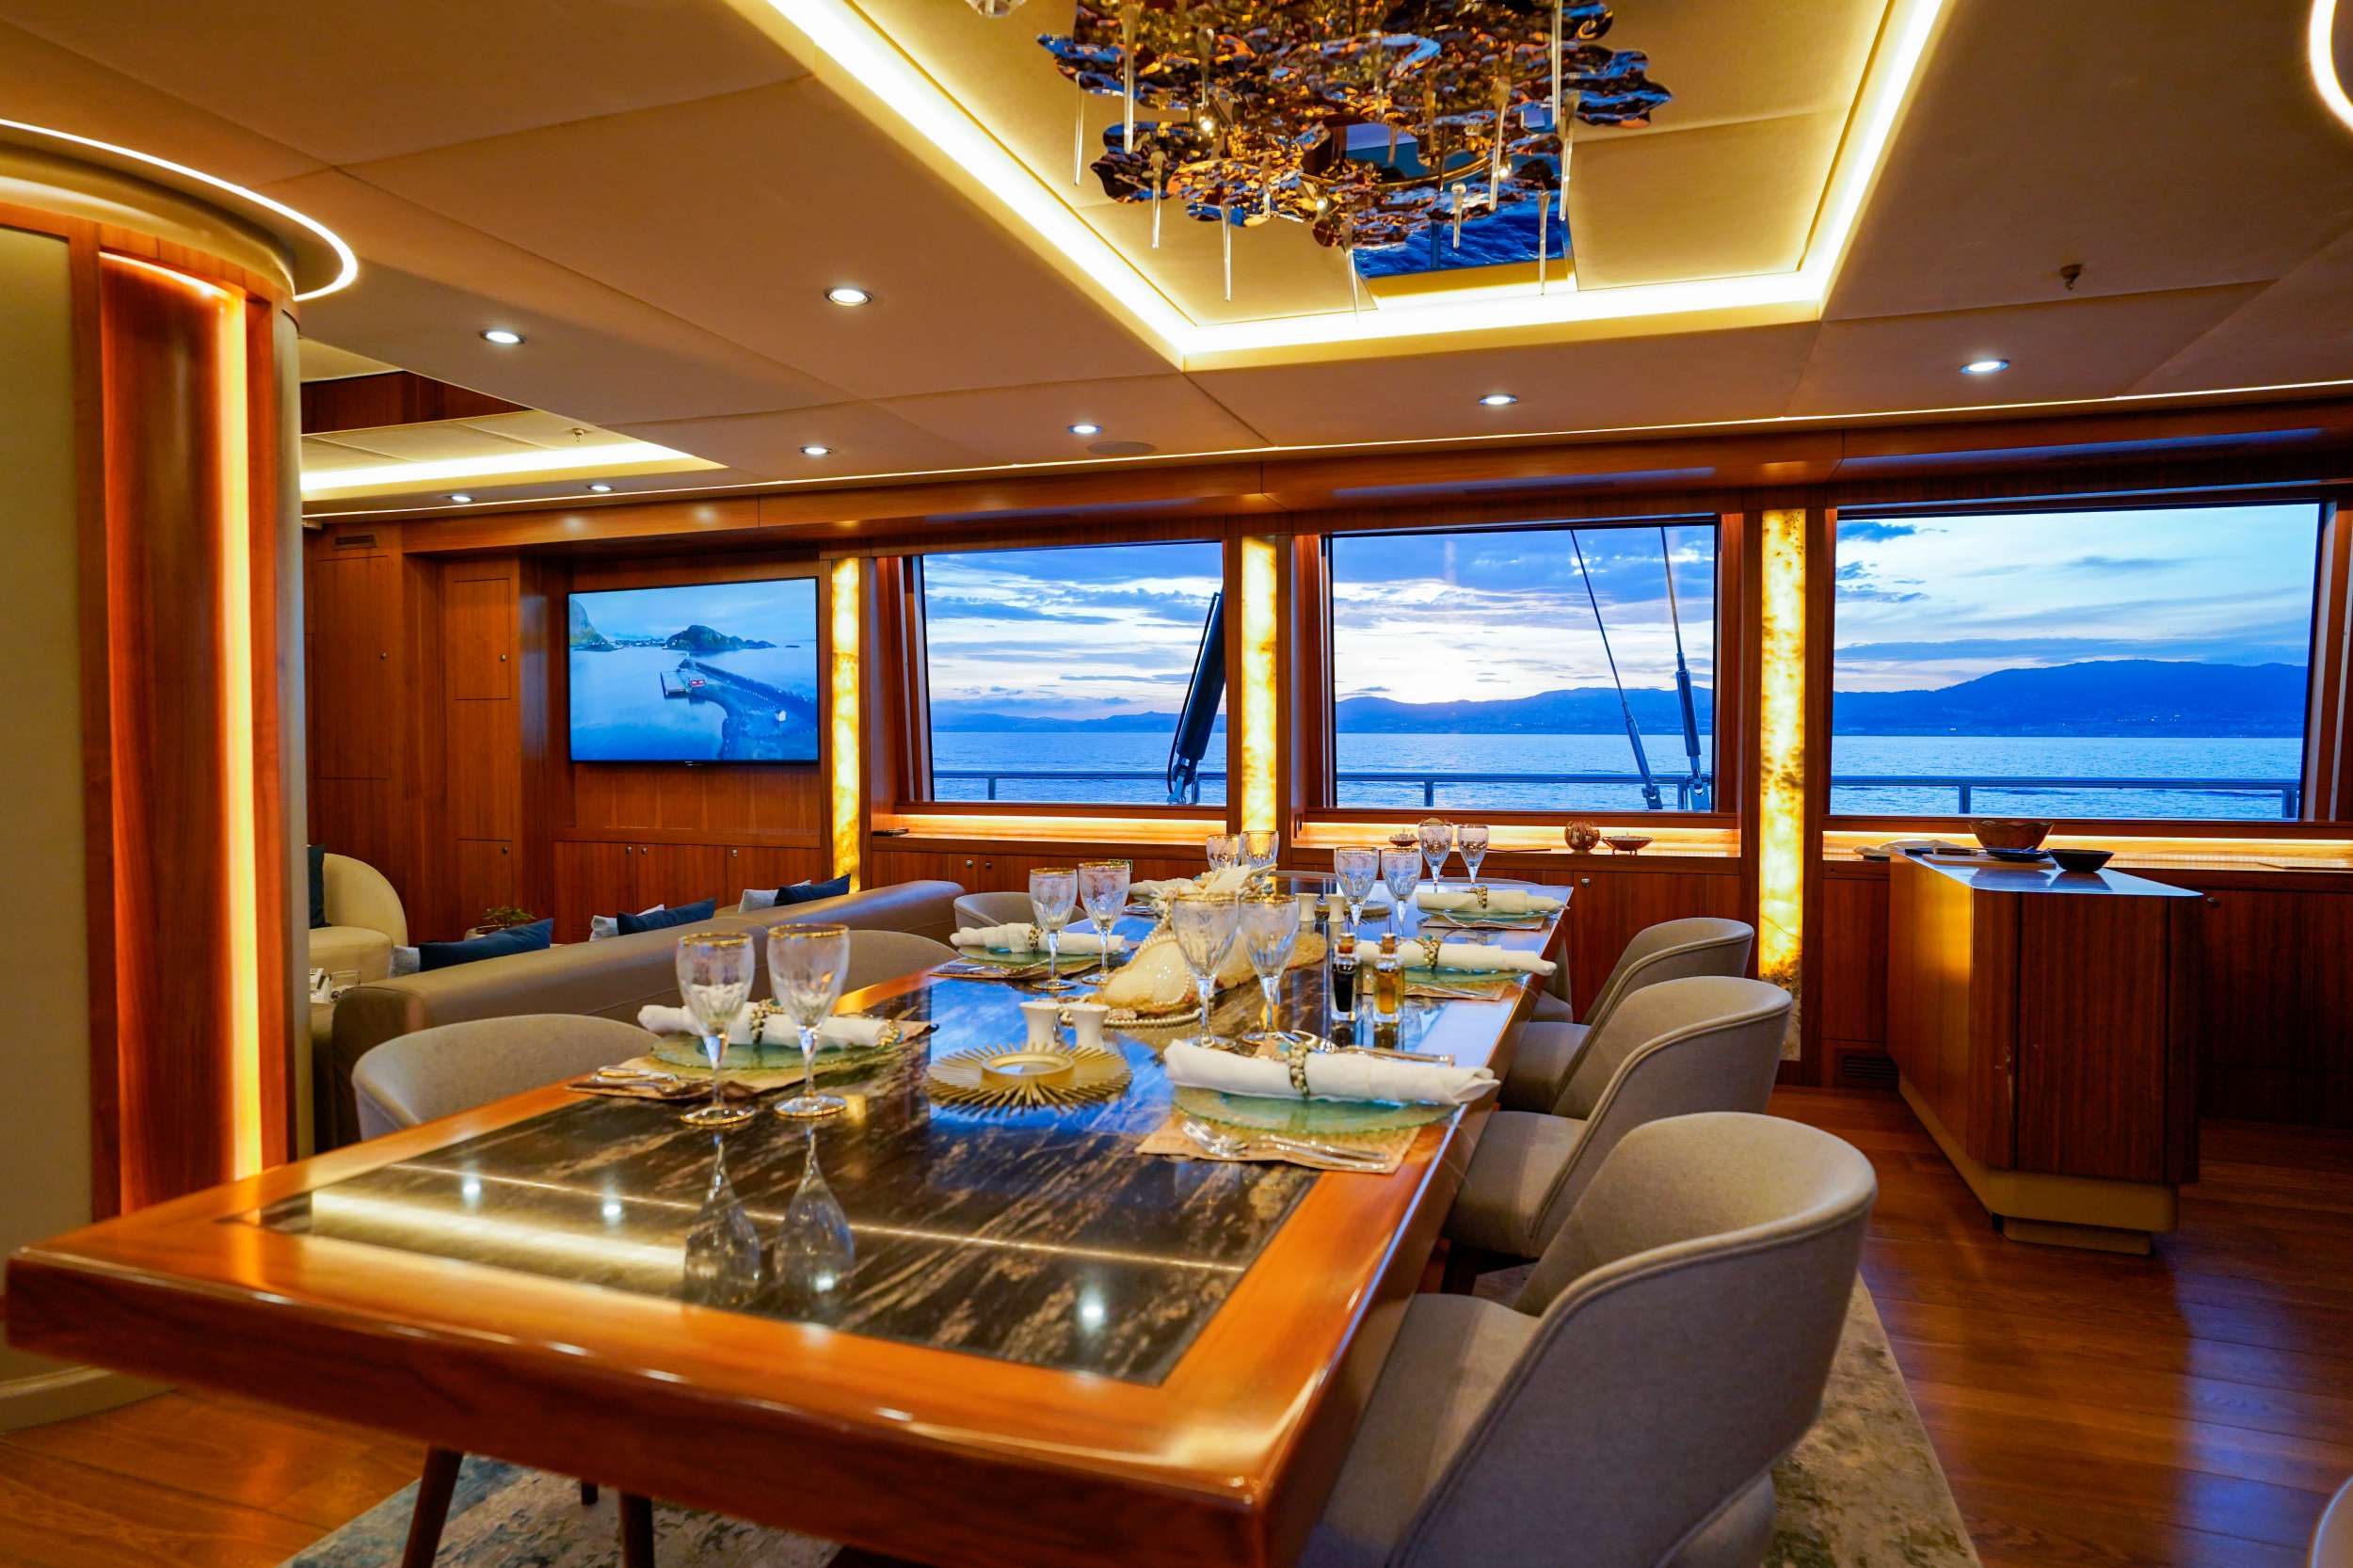 ARESTEAS - Luxury yacht charter Turkey & Boat hire in W. Med -Naples/Sicily, W. Med -Riviera/Cors/Sard., W. Med - Spain/Balearics 2